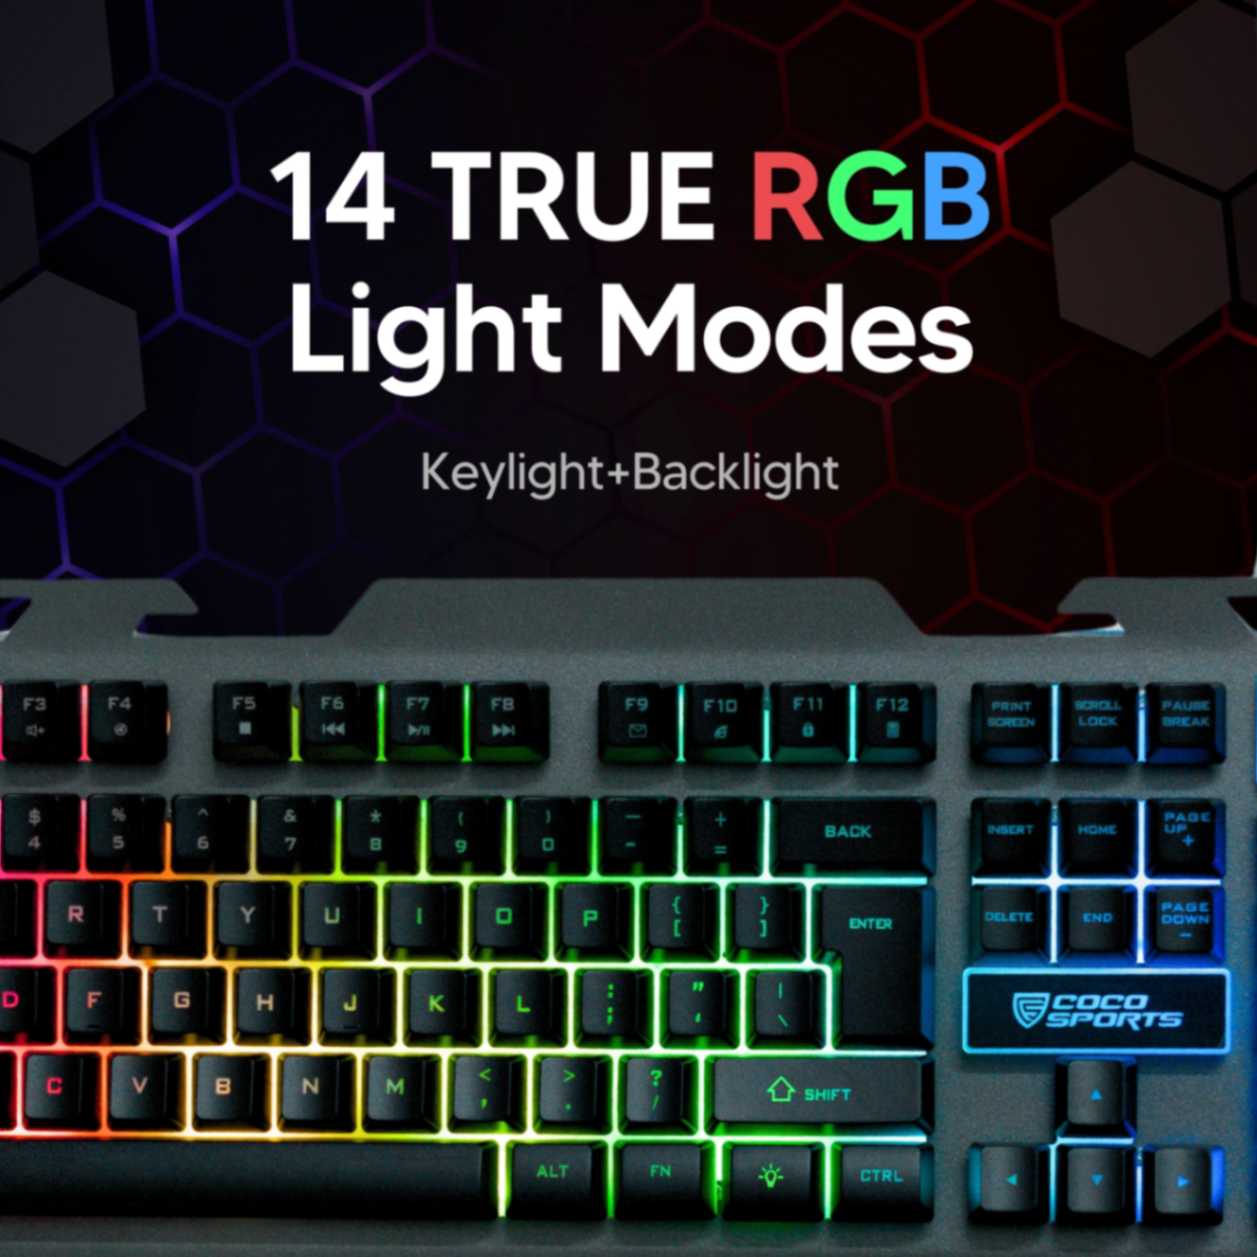 Krater Gaming Wired Keyboard Mouse Combo,104 Keys, Rainbow Backlighting, 19 Anti-Ghosting Keys